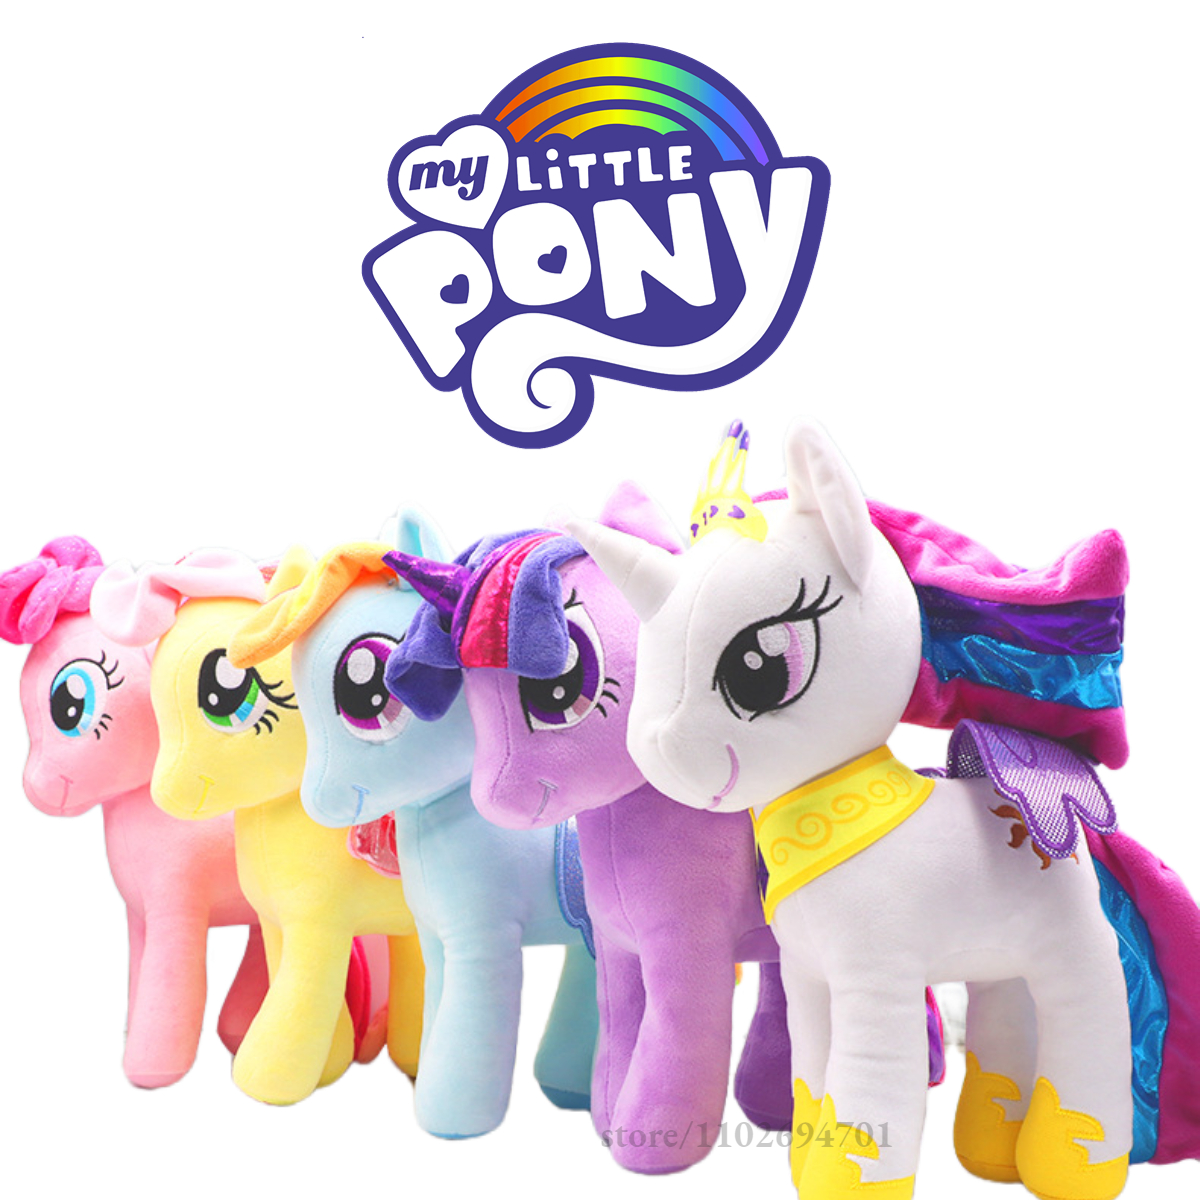 22 35 45cm My Little Pony Princess Cadance Plush Toy Plushie Dolls Soft Stuffed Animals Kawaii - My Little Pony Plush